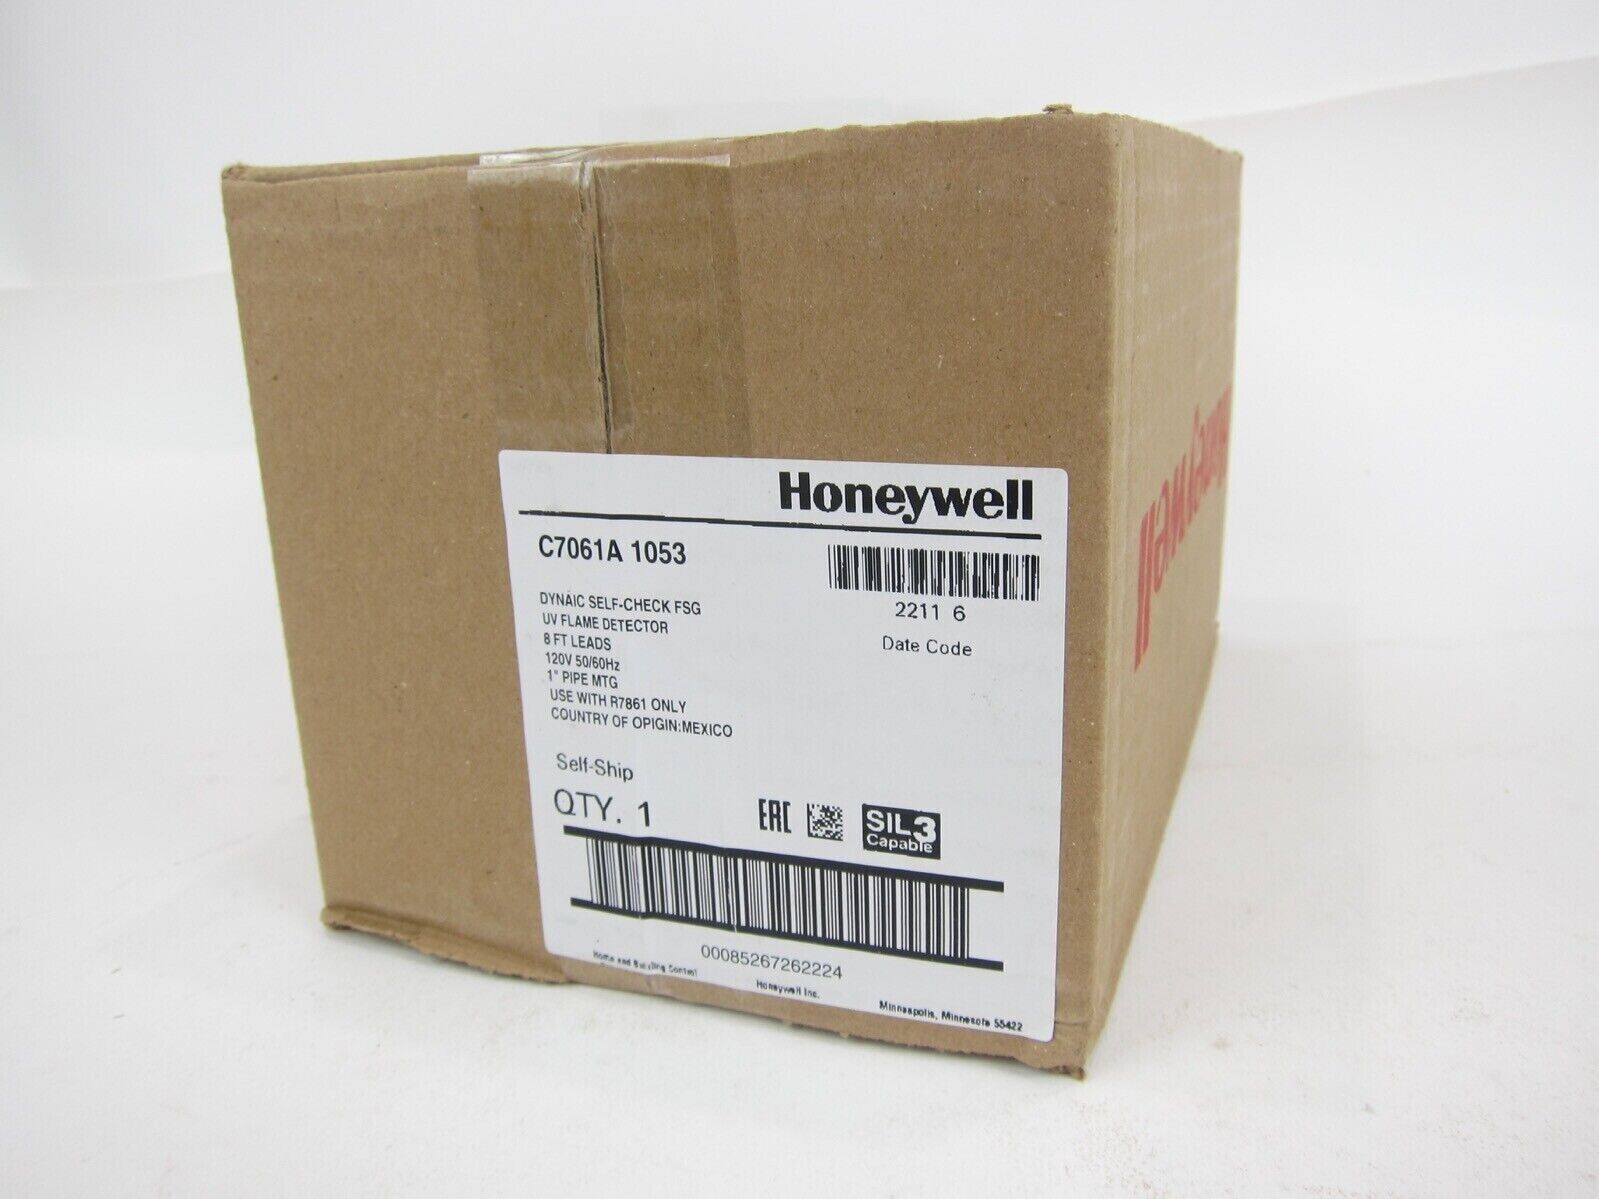 New Honeywell C7061A1053 UV Flame Detector C7061A1053